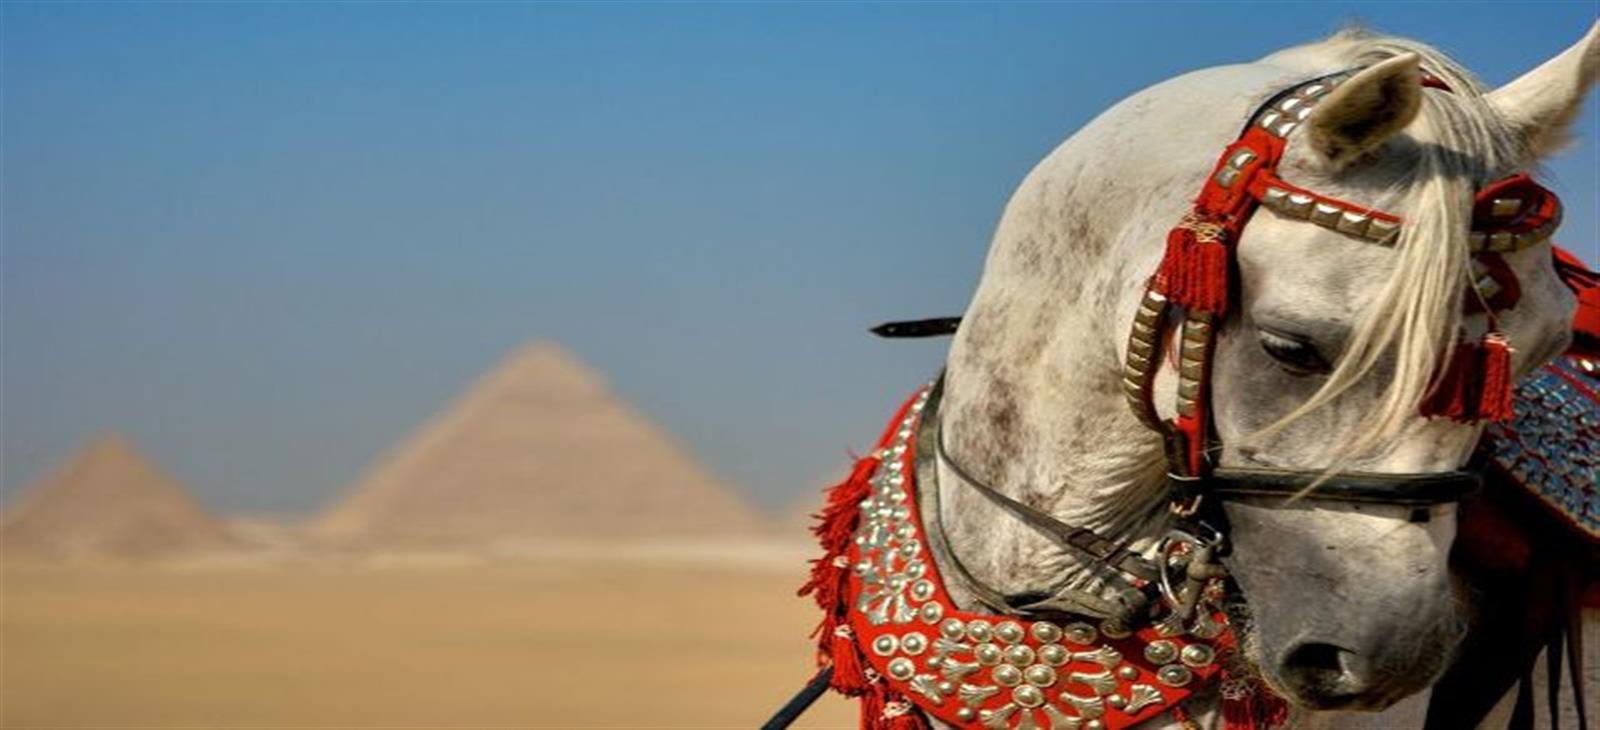 Grandes Pirámides de Giza